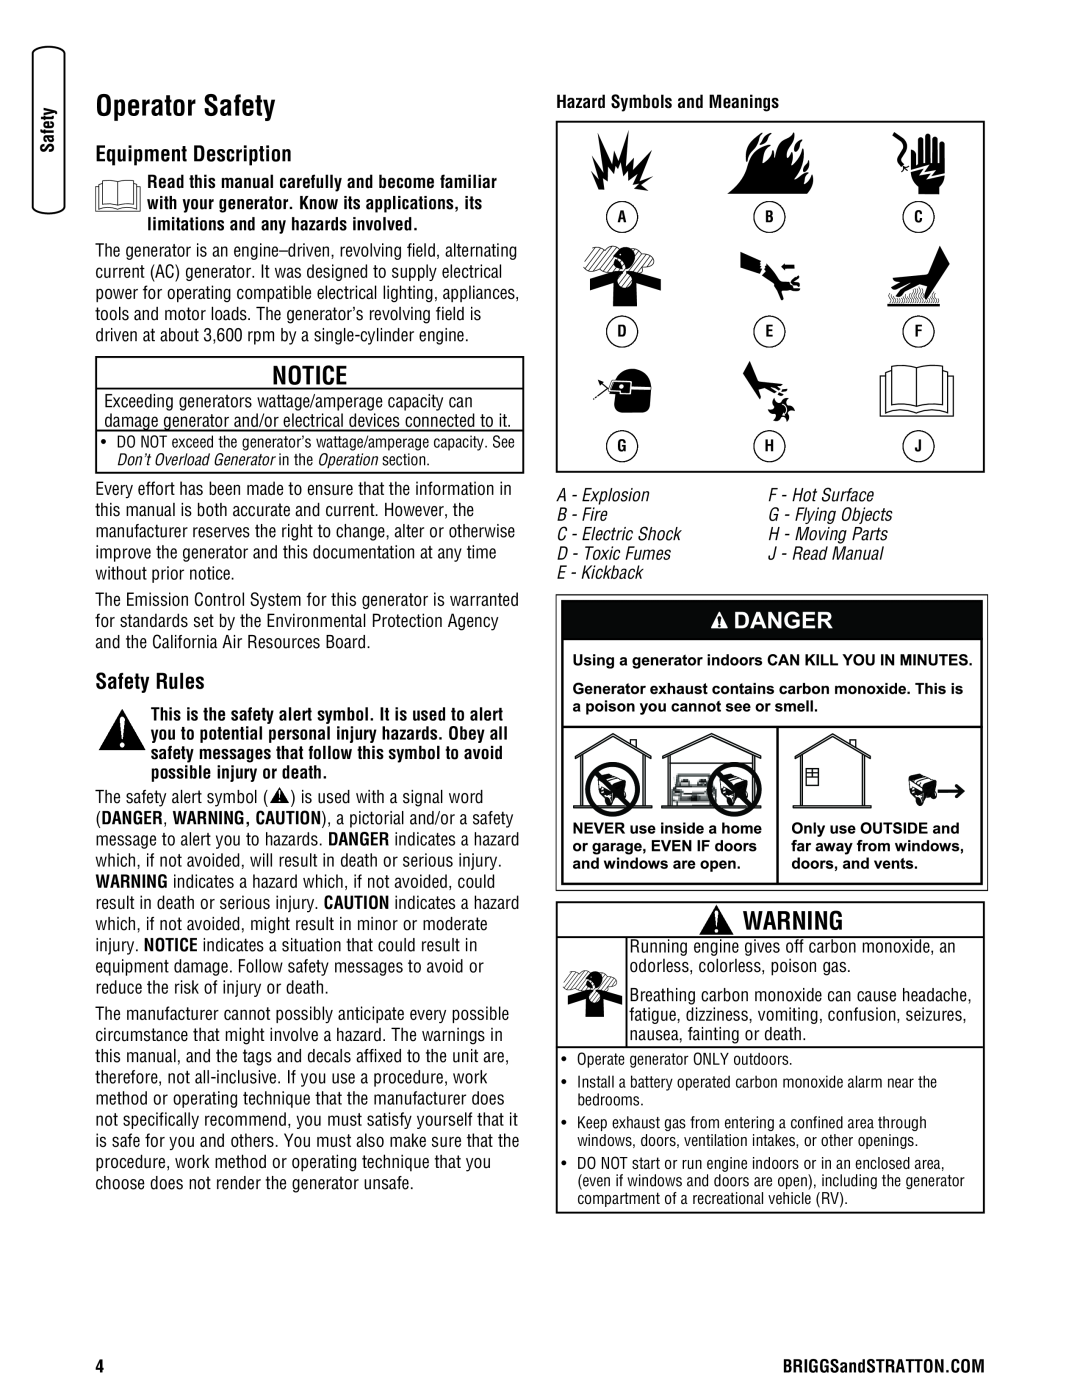 Briggs & Stratton 8000 Watt Portable Generator manual Operator Safety, Equipment Description, Safety Rules, A - Explosion 